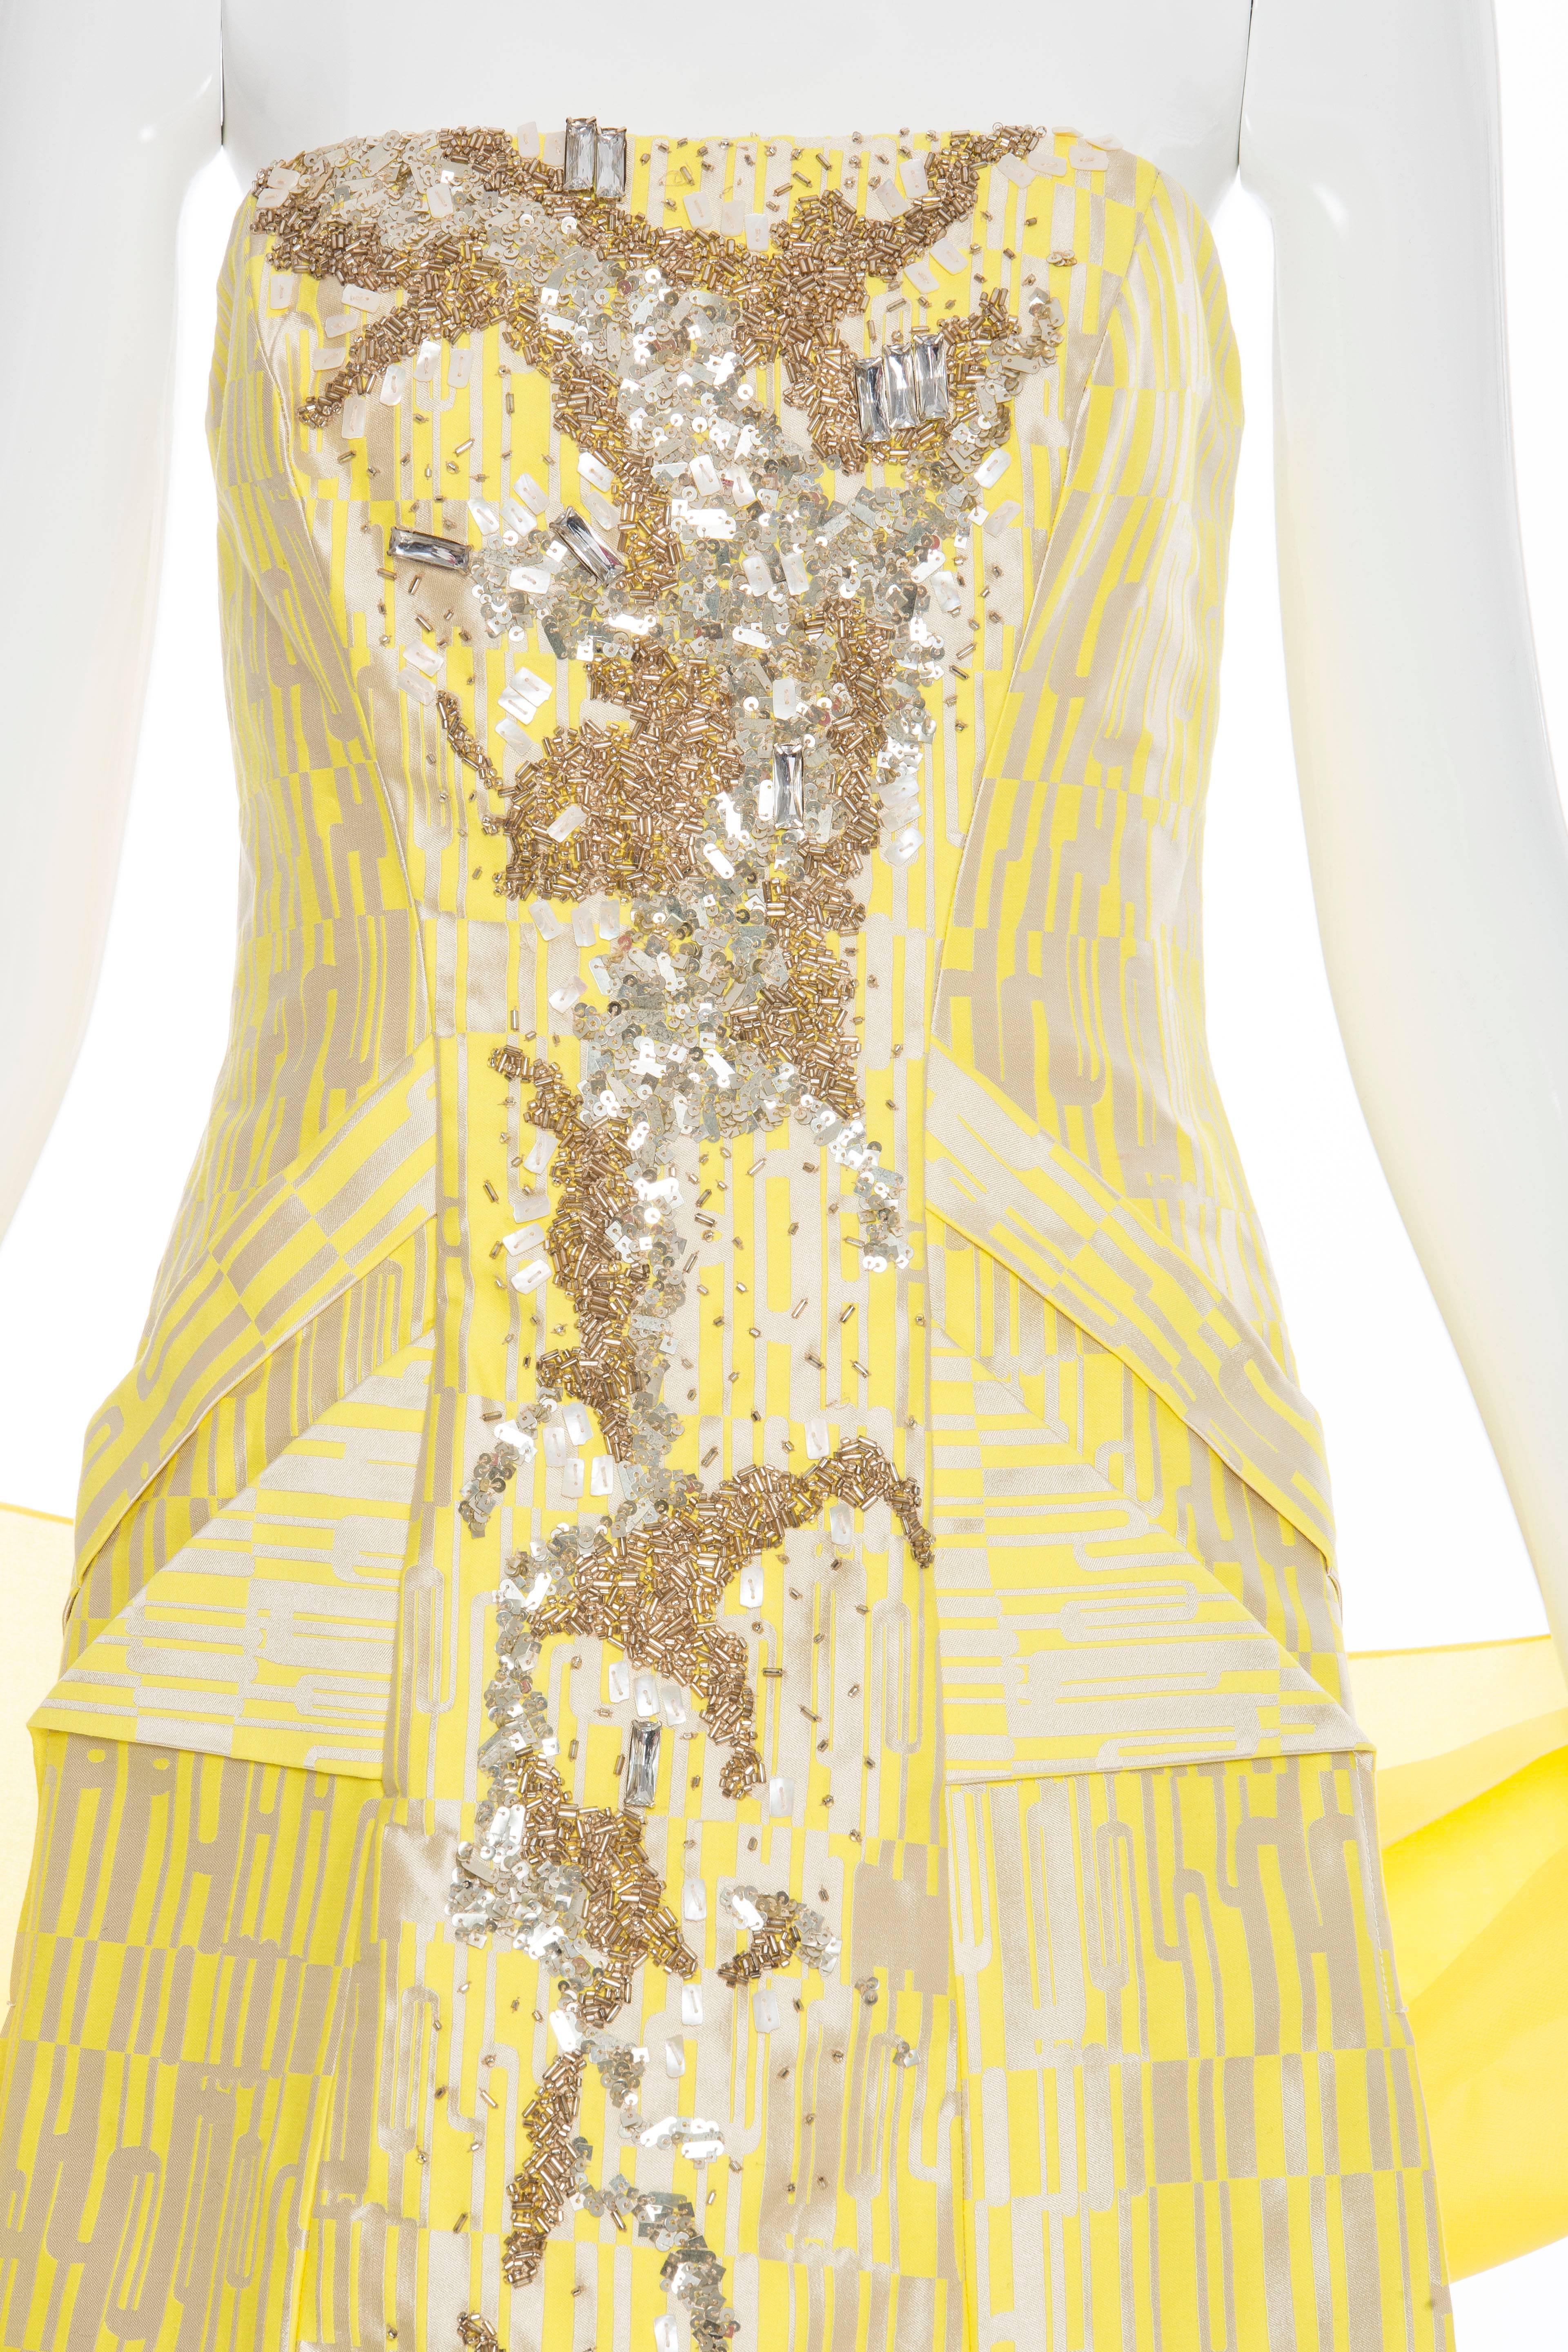 Carolina Herrera Strapless Dress Spring 2012 For Sale 1